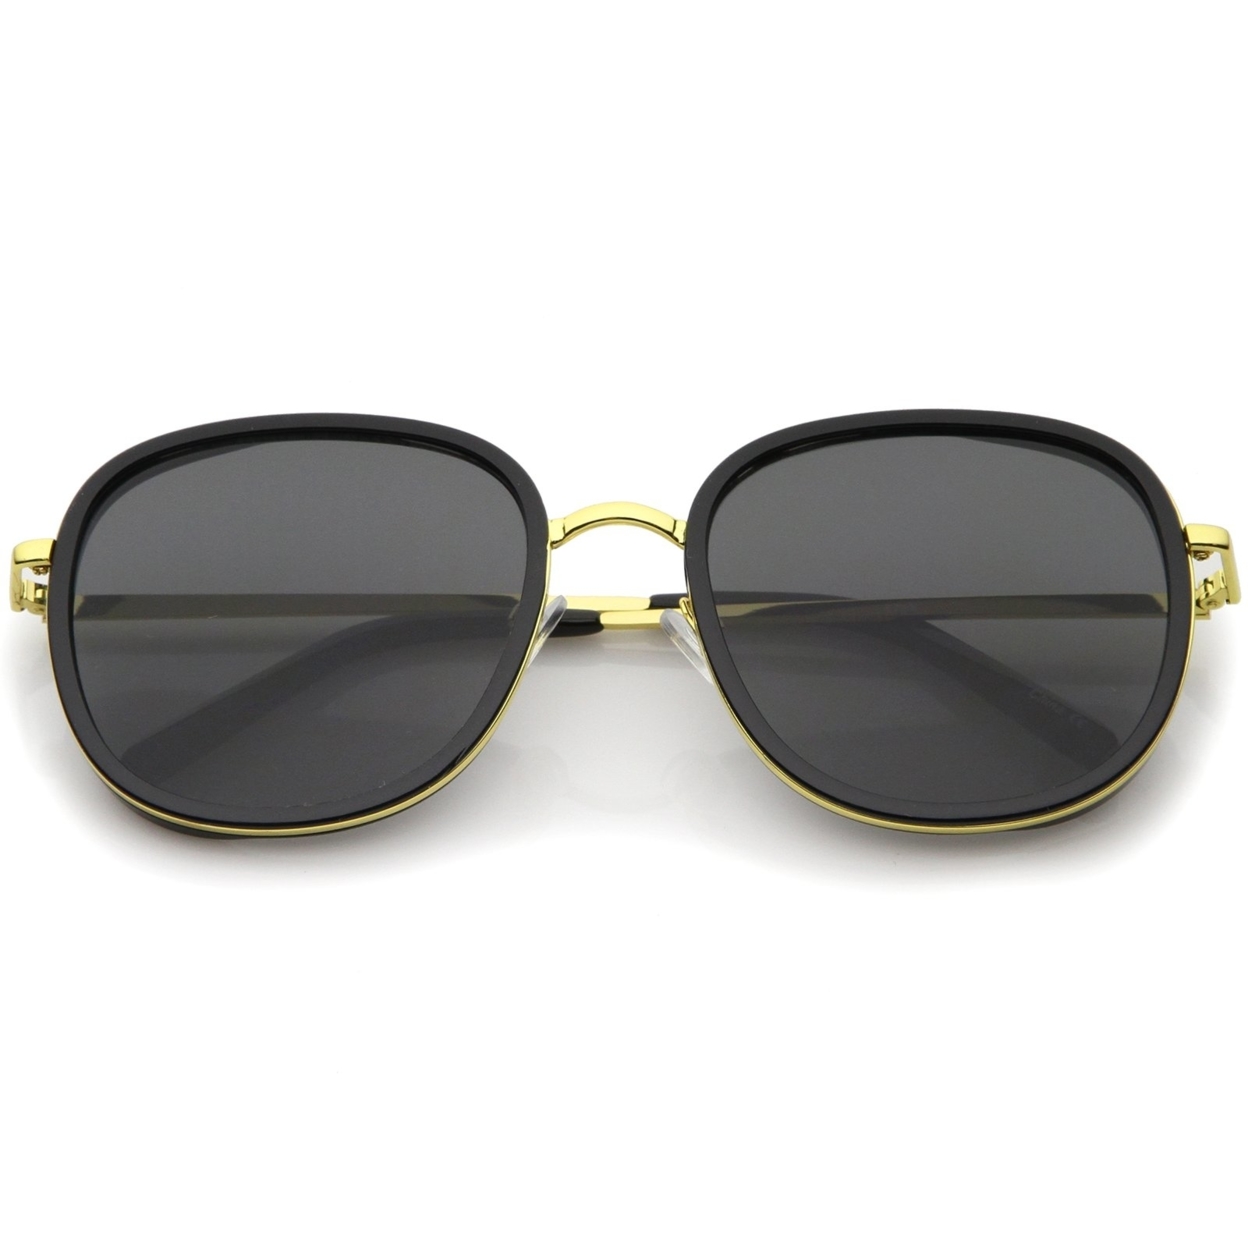 Modern Metal Temple Trim Flat Lens Square Sunglasses 55mm - Tortoise-Gold / Brown